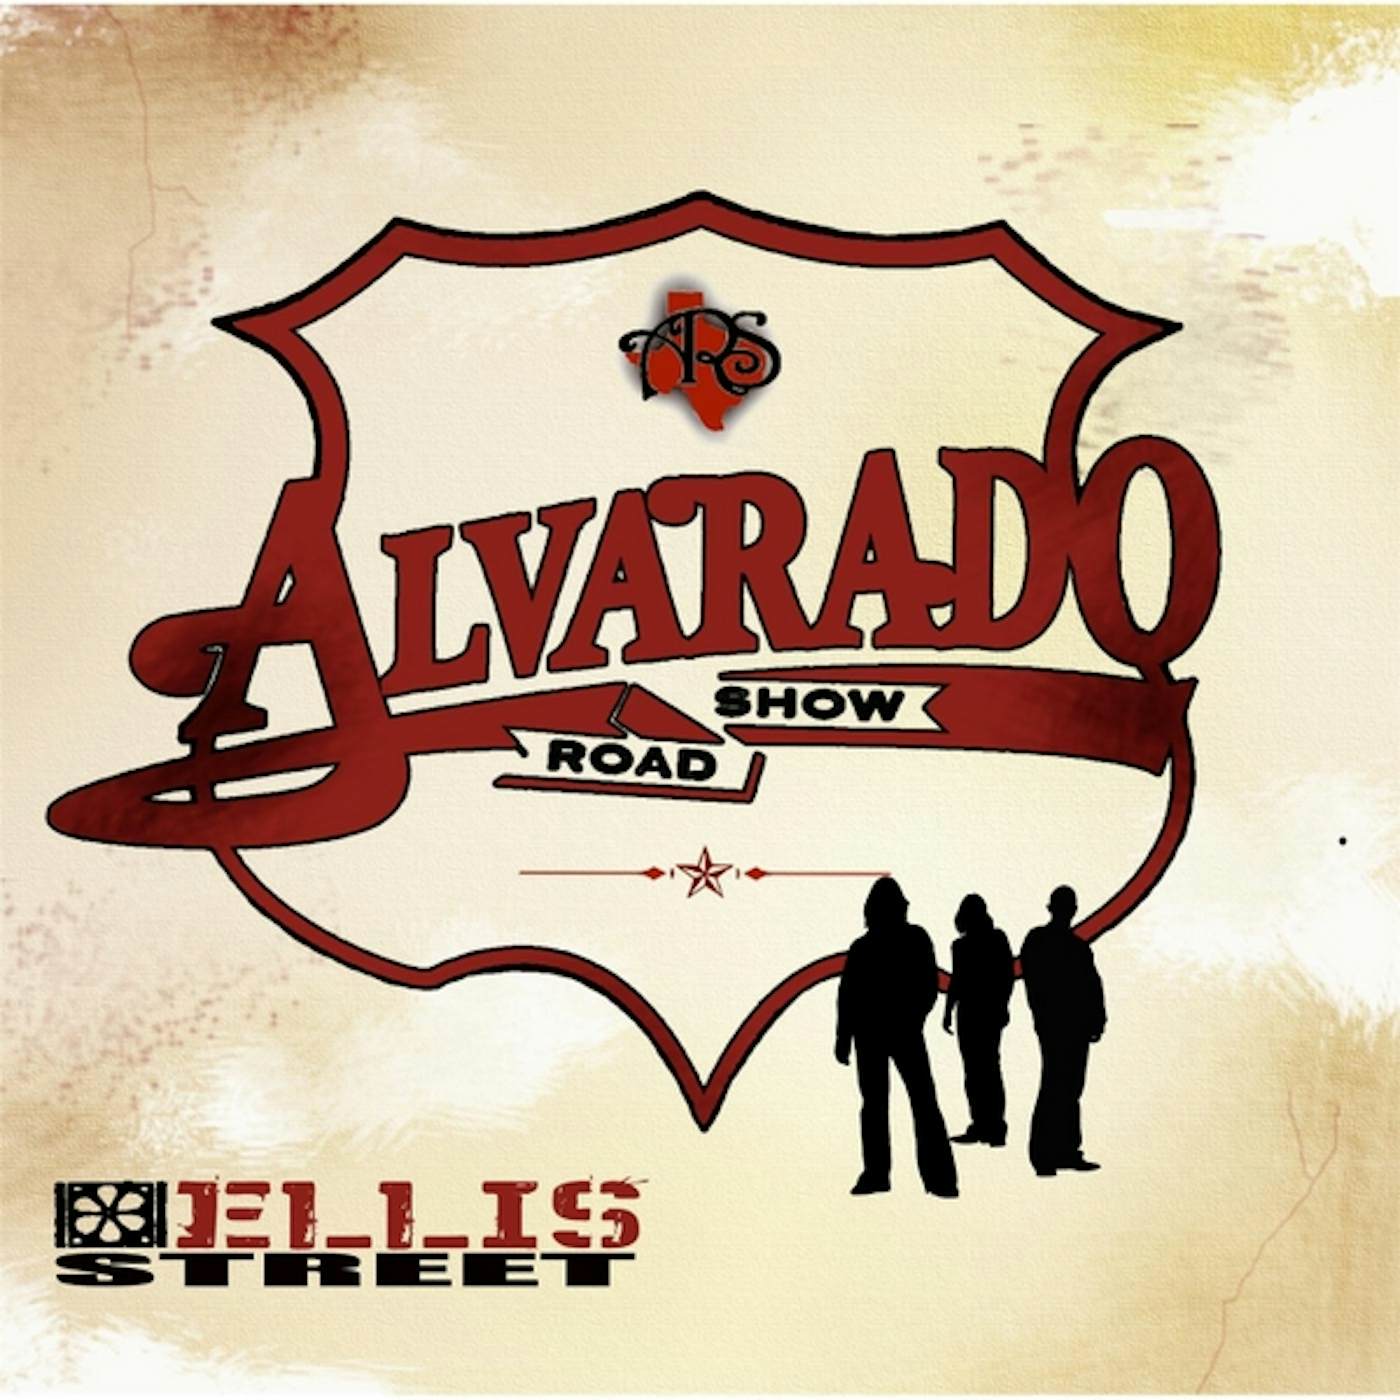 Alvarado Road Show ELLIS STREET CD